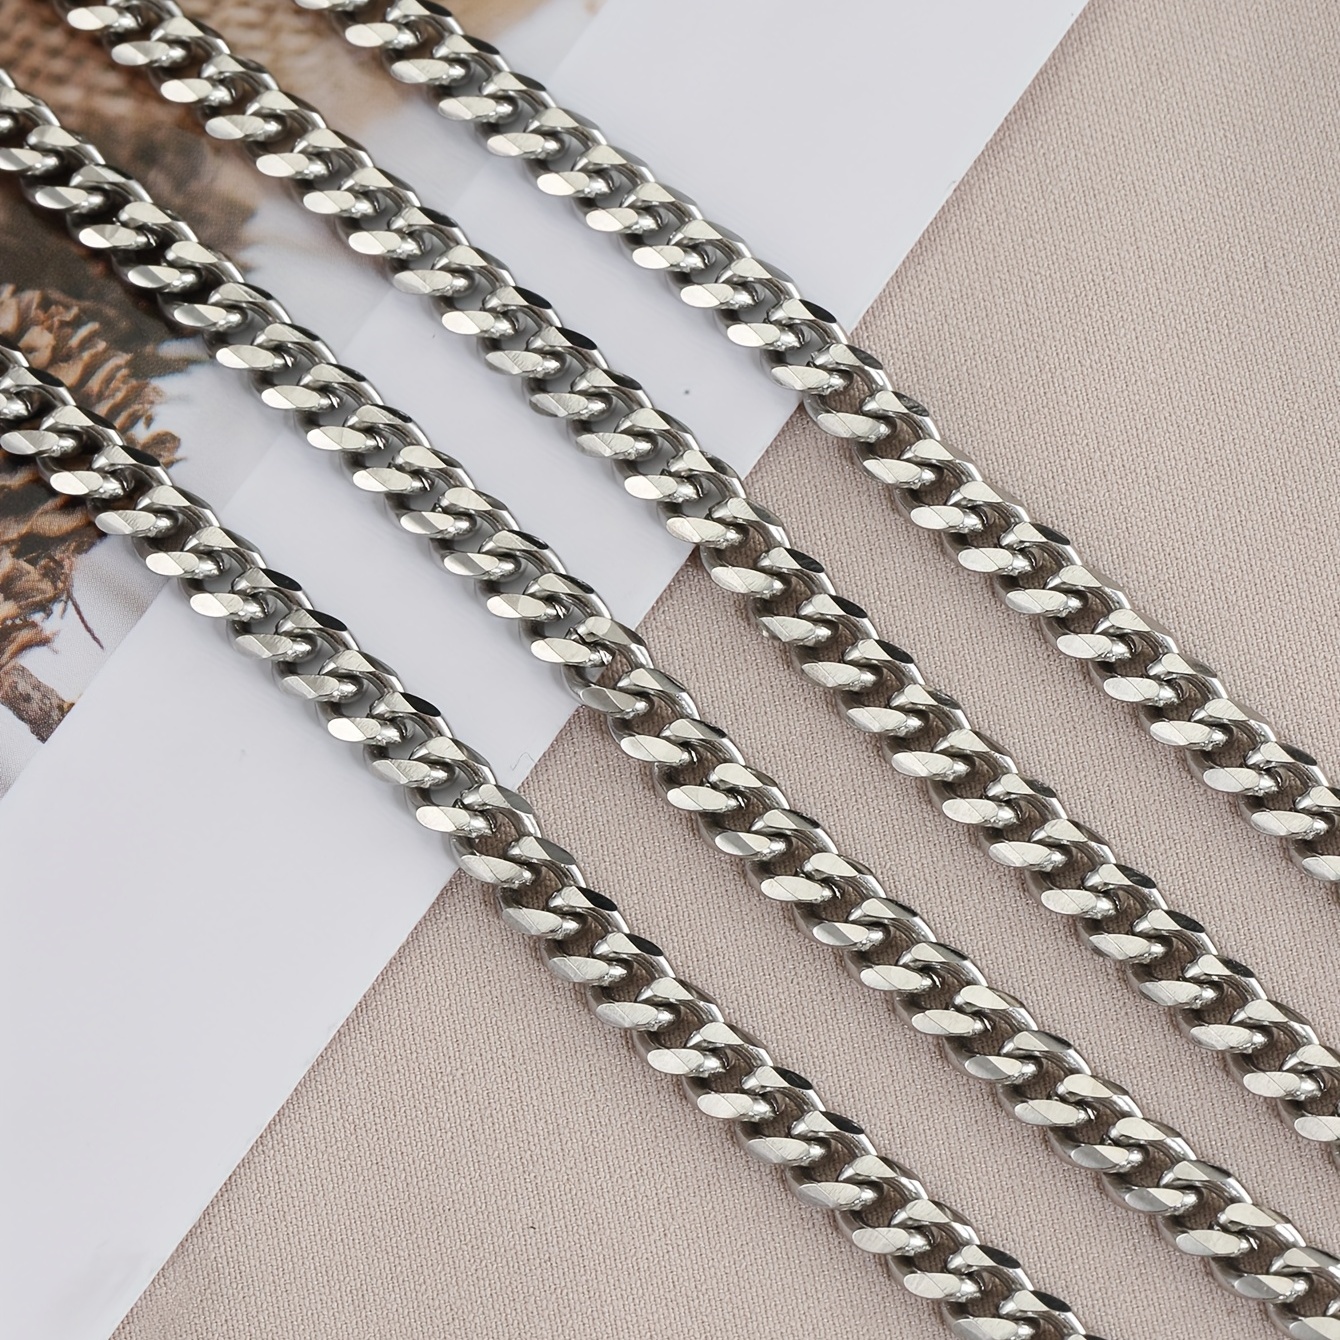 Punk Style Bracelet & Necklace Set For Men - Cuban Stainless Steel